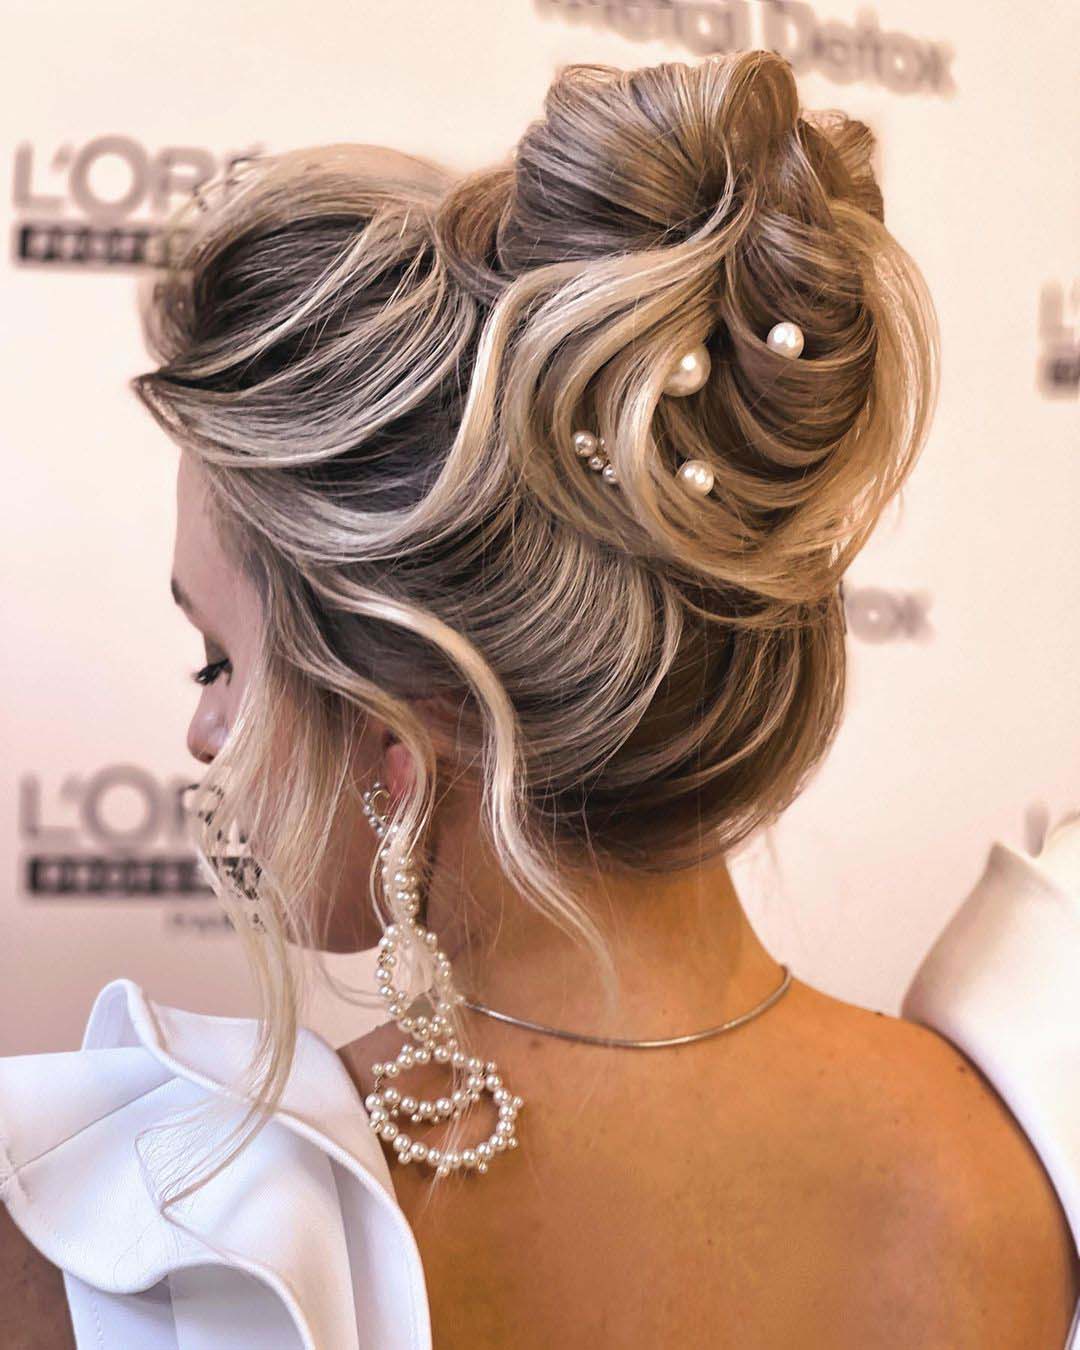 bridesmaid hairstyles curly high bun with pearls barbara.szuksztul.lenarczyk